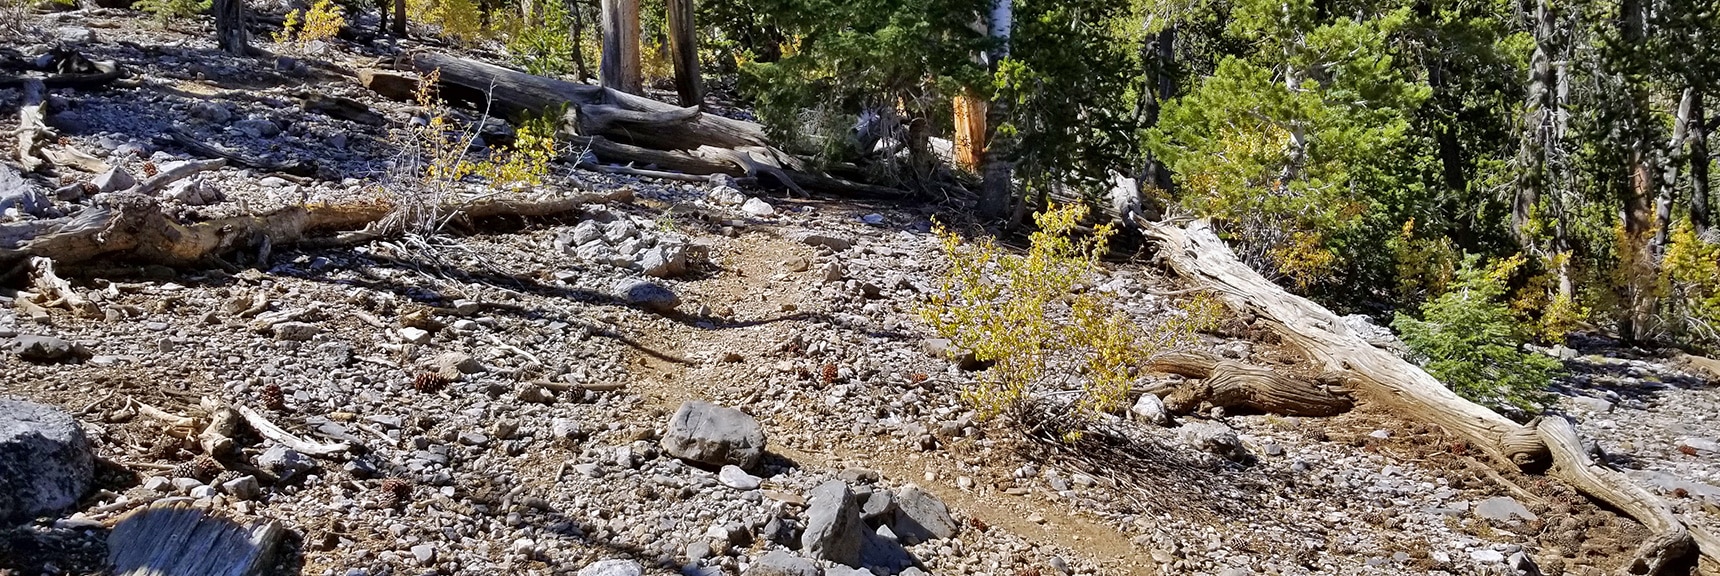 Upper Cougar Ridge Trail in Excellent Condition | Mummy Springs Loop | Mt. Charleston Wilderness | Spring Mountains, Nevada